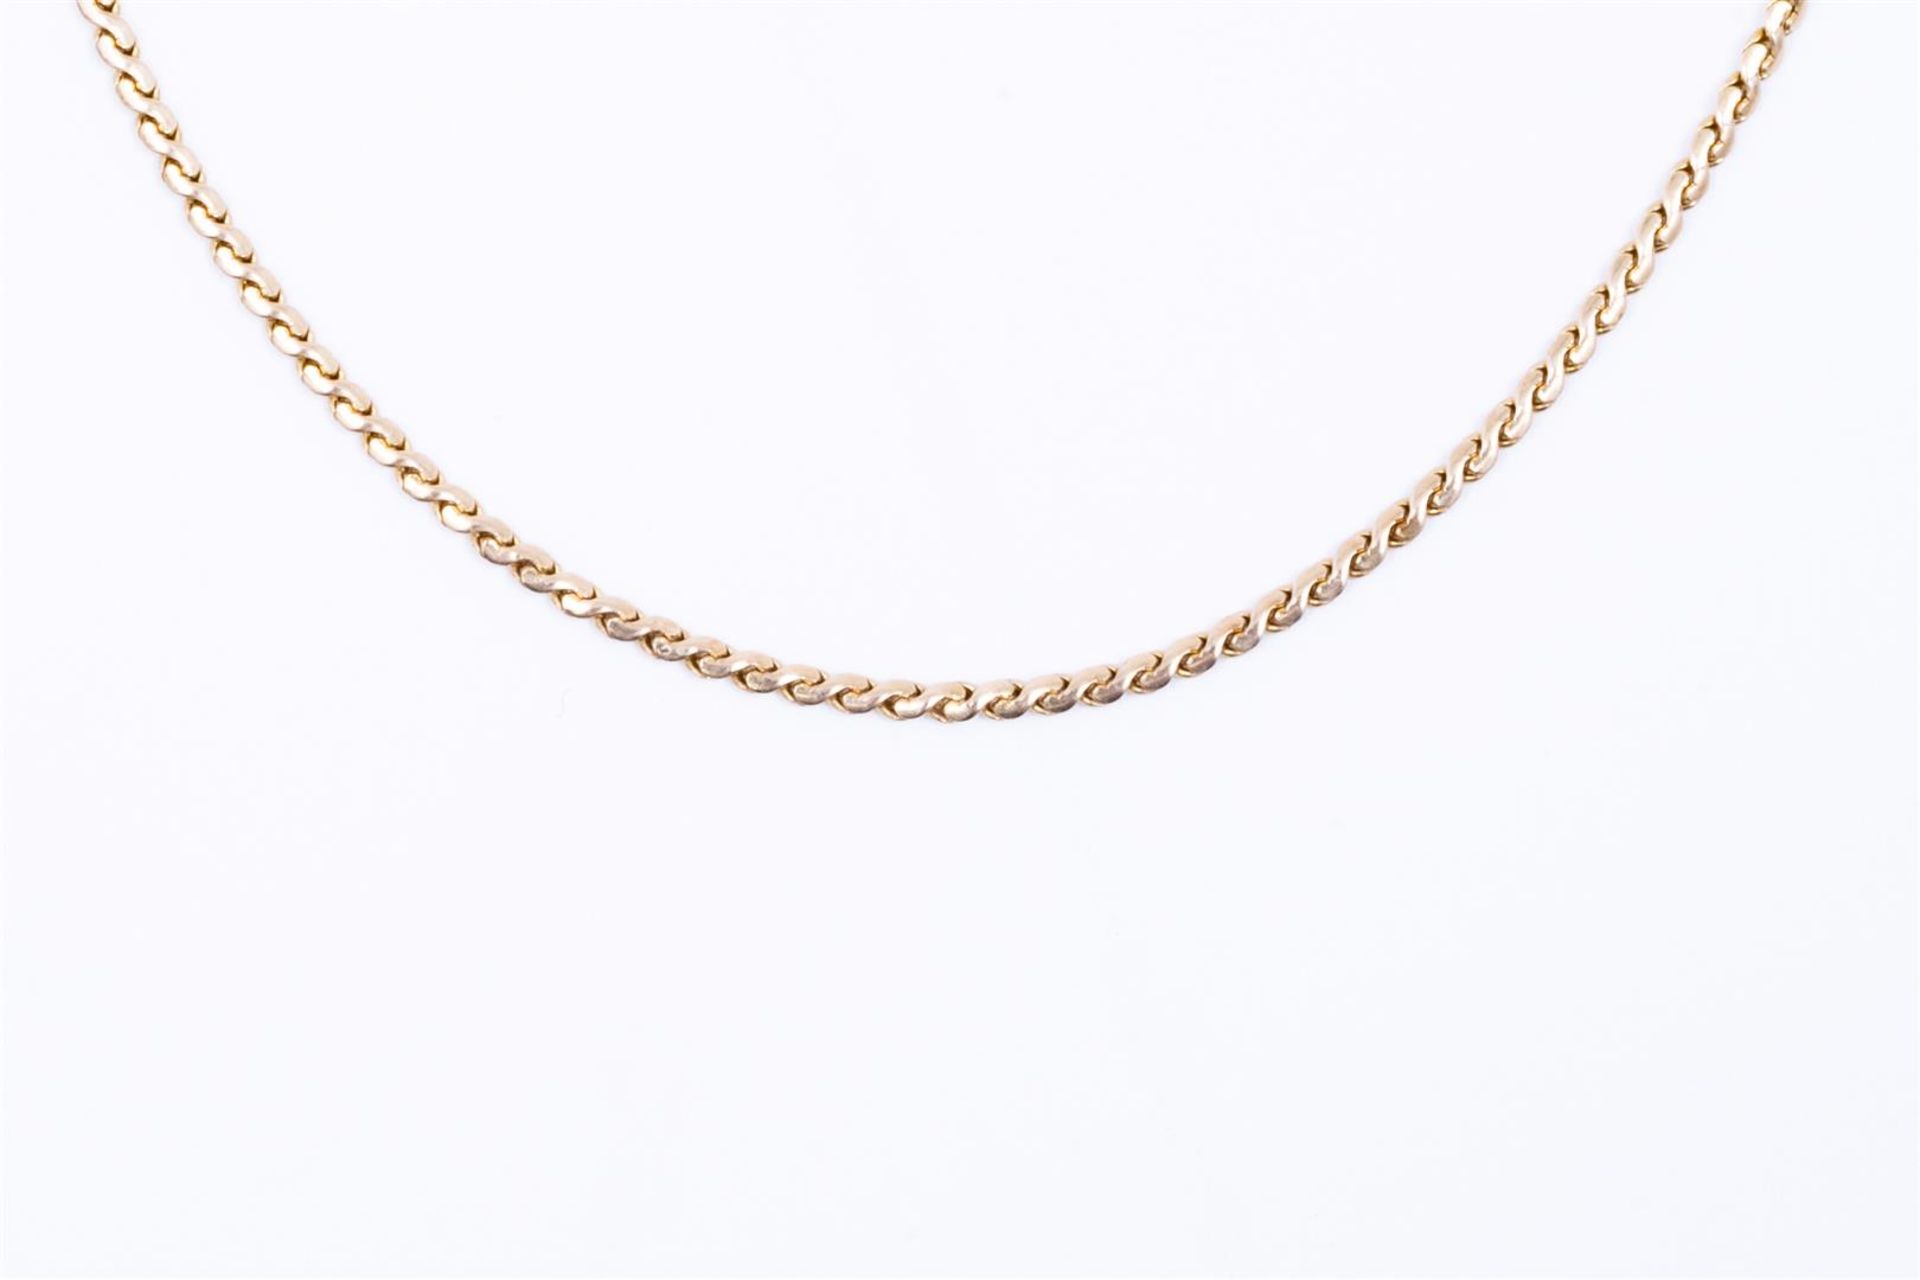 14kt yellow gold S-shape link necklace.
Length: 43.5 cm
Link width: 1.35 - 1.40 mm.
Inspection marks - Bild 2 aus 3